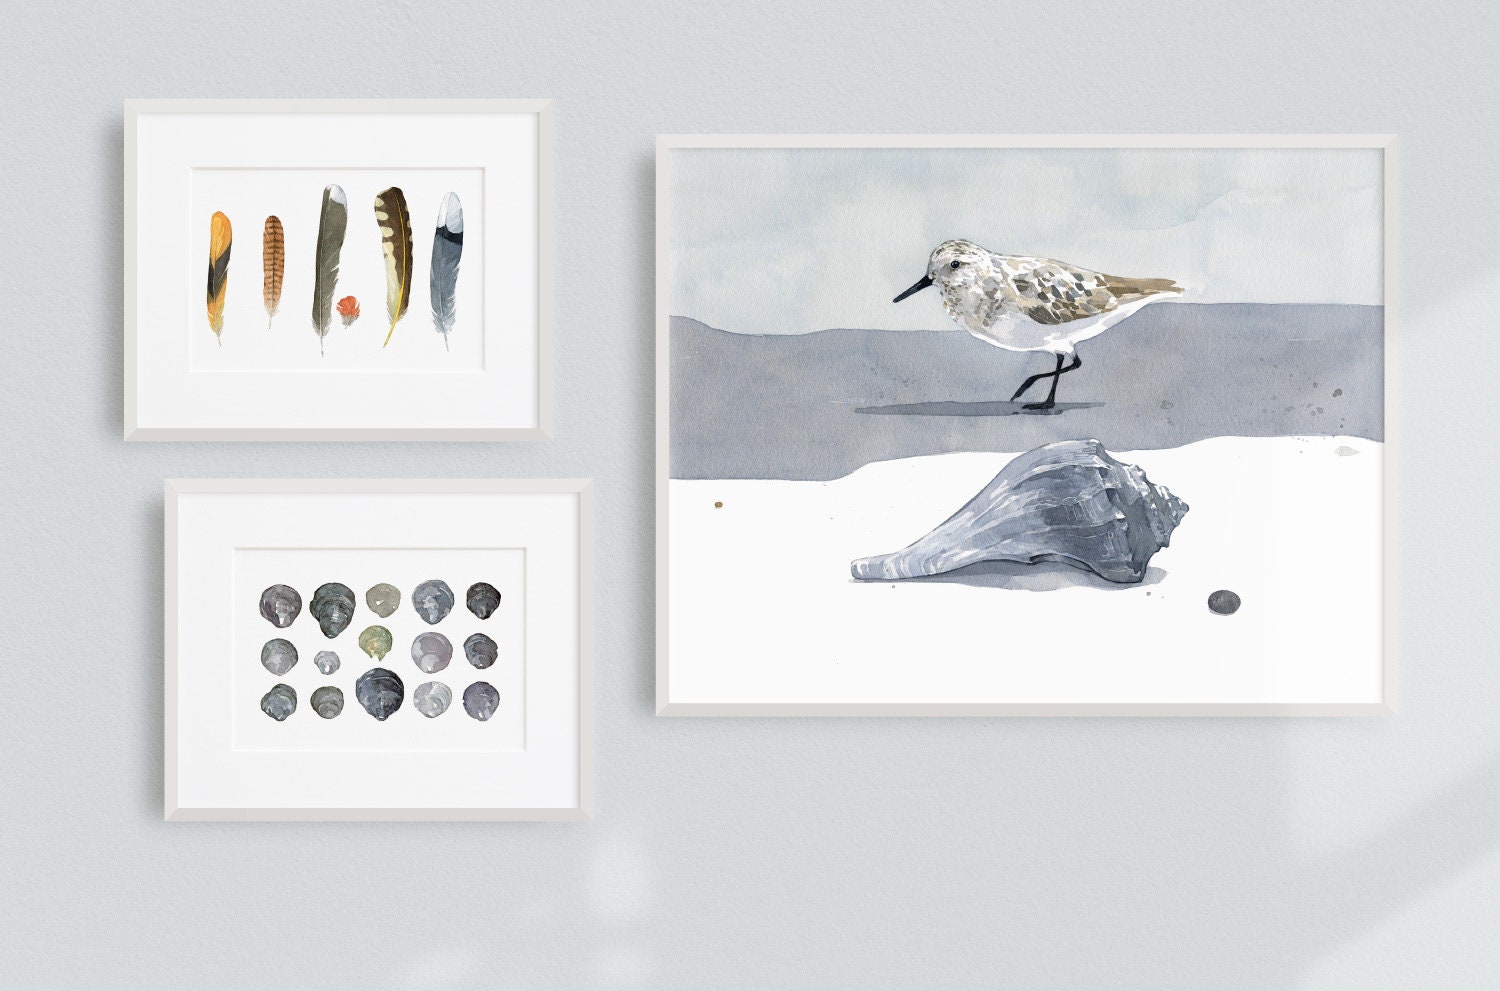 Sandpiper and Whelk Watercolor Print, Beach Bird Wall Art, Living Room Wall Art